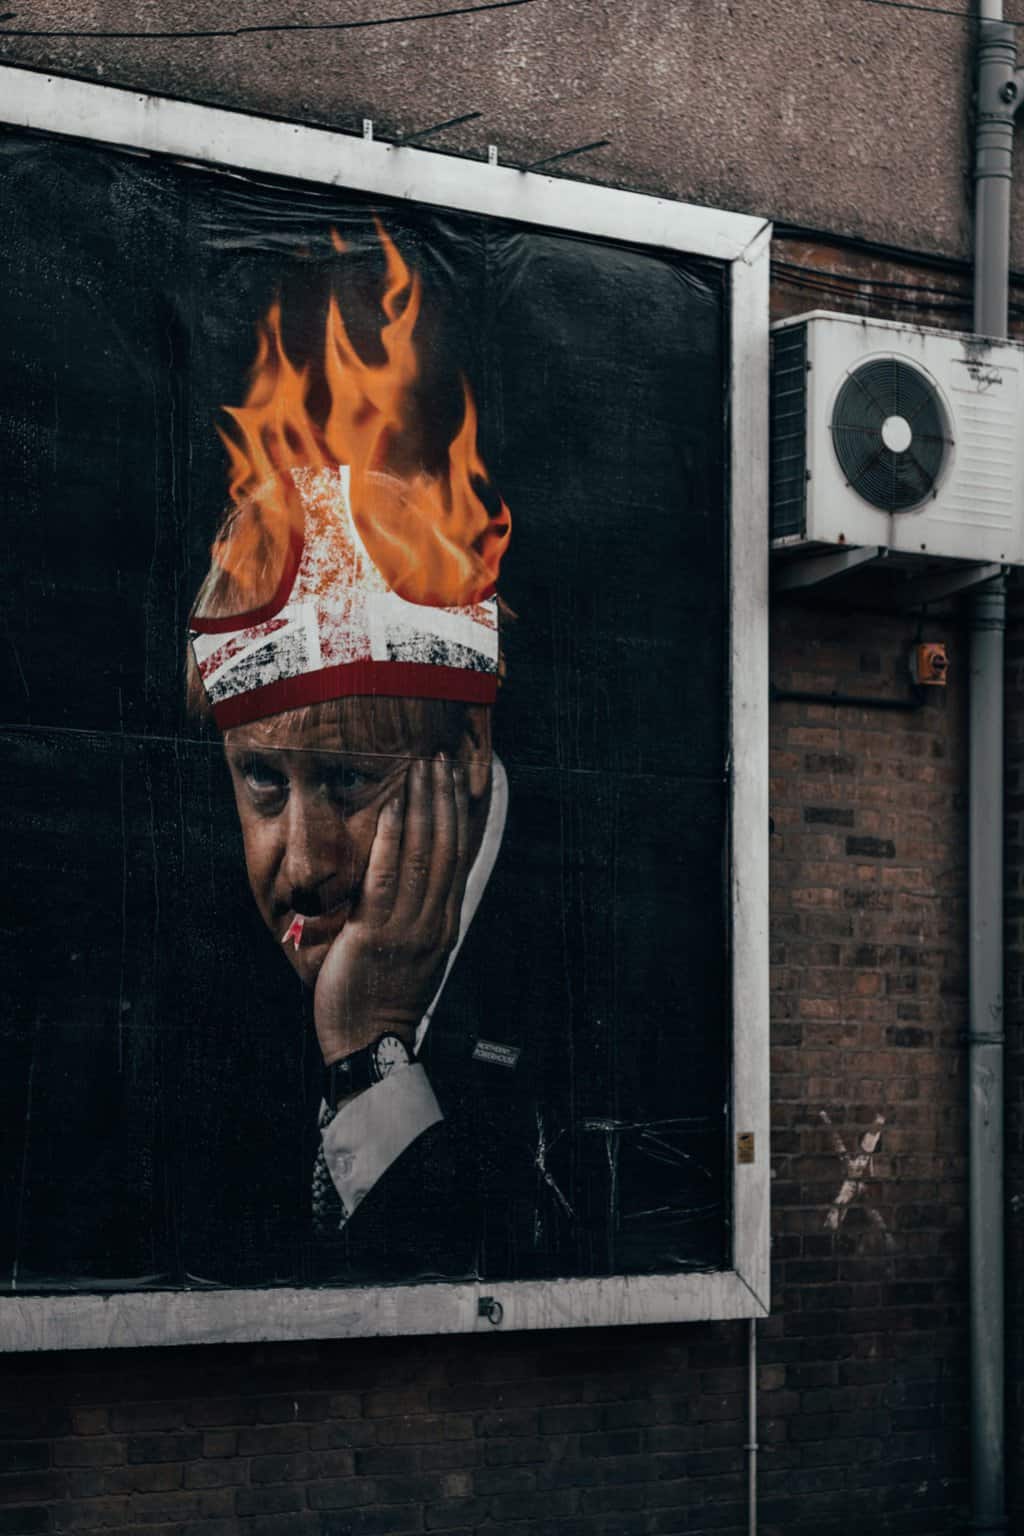 Pants on fire - billboard with Boris Johnson.